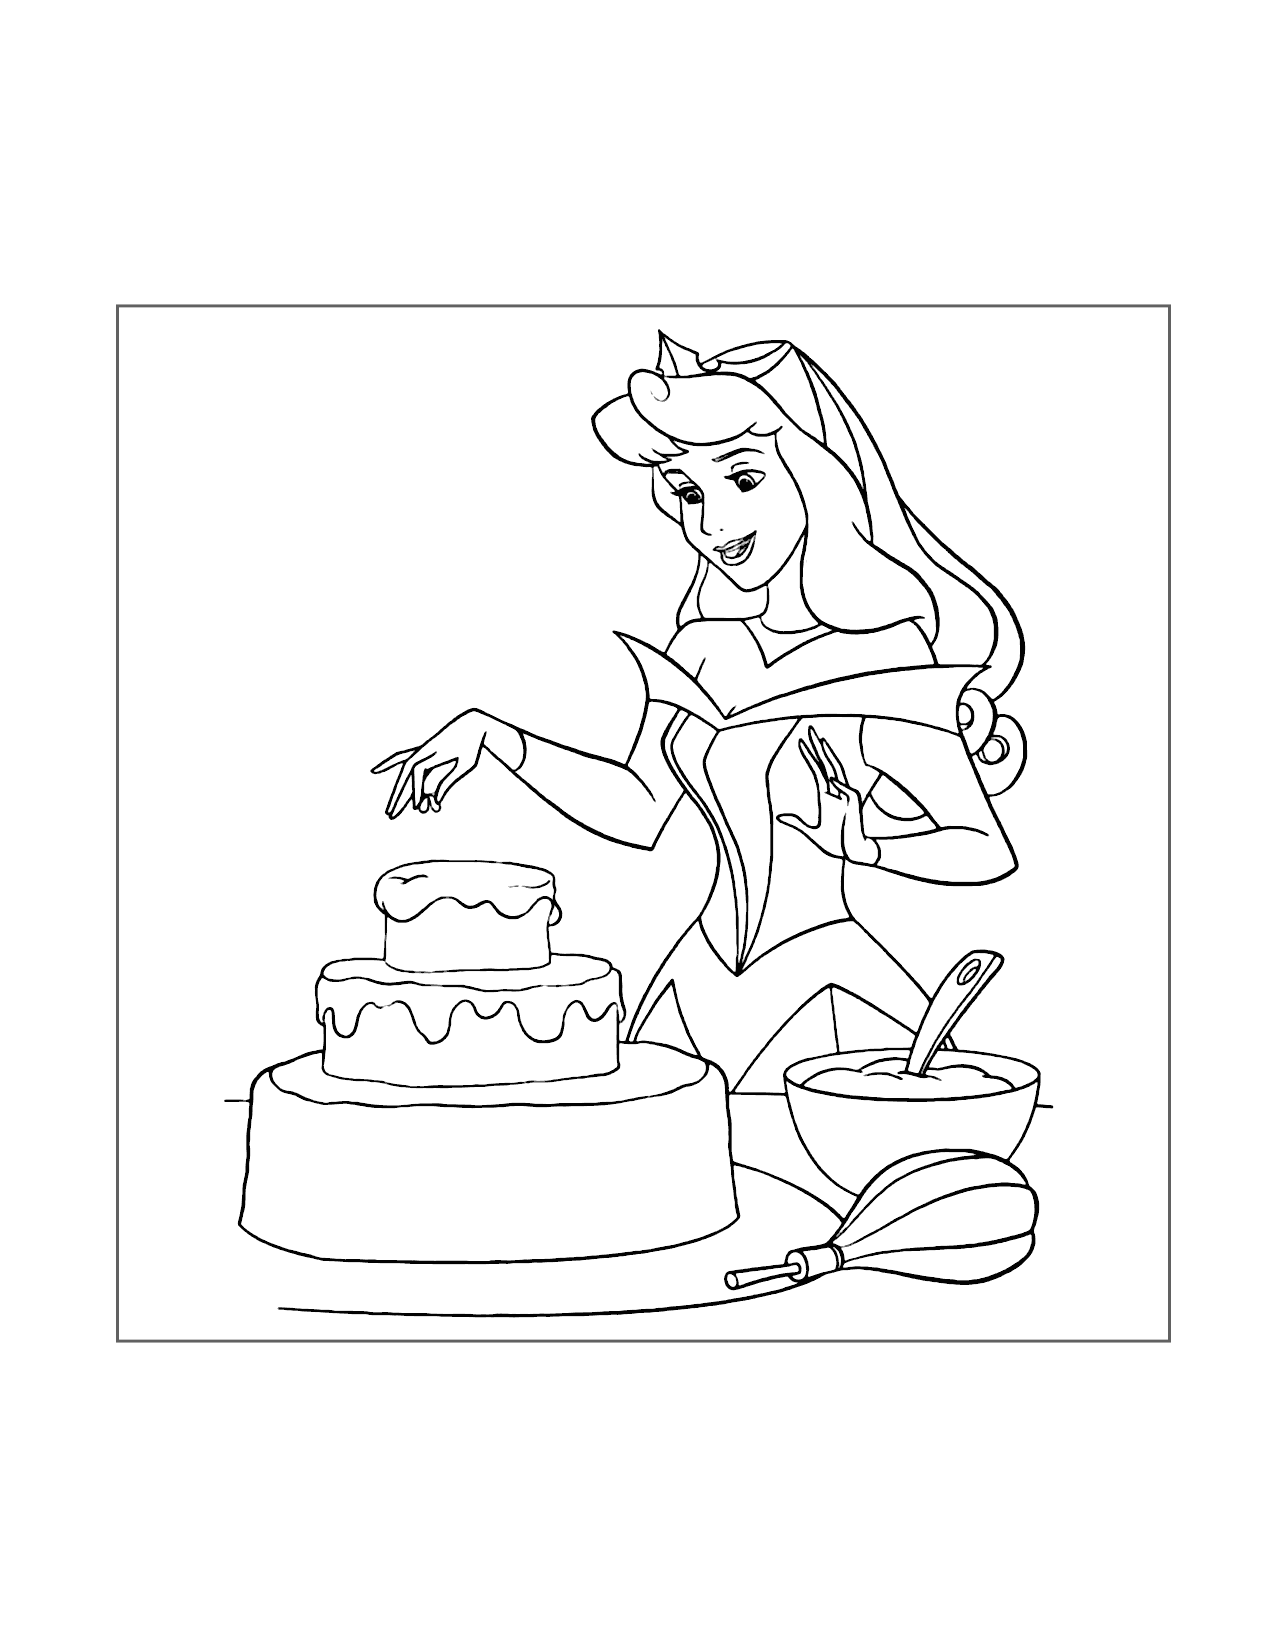 Princess Aurora Bakes A Cake Coloring Page